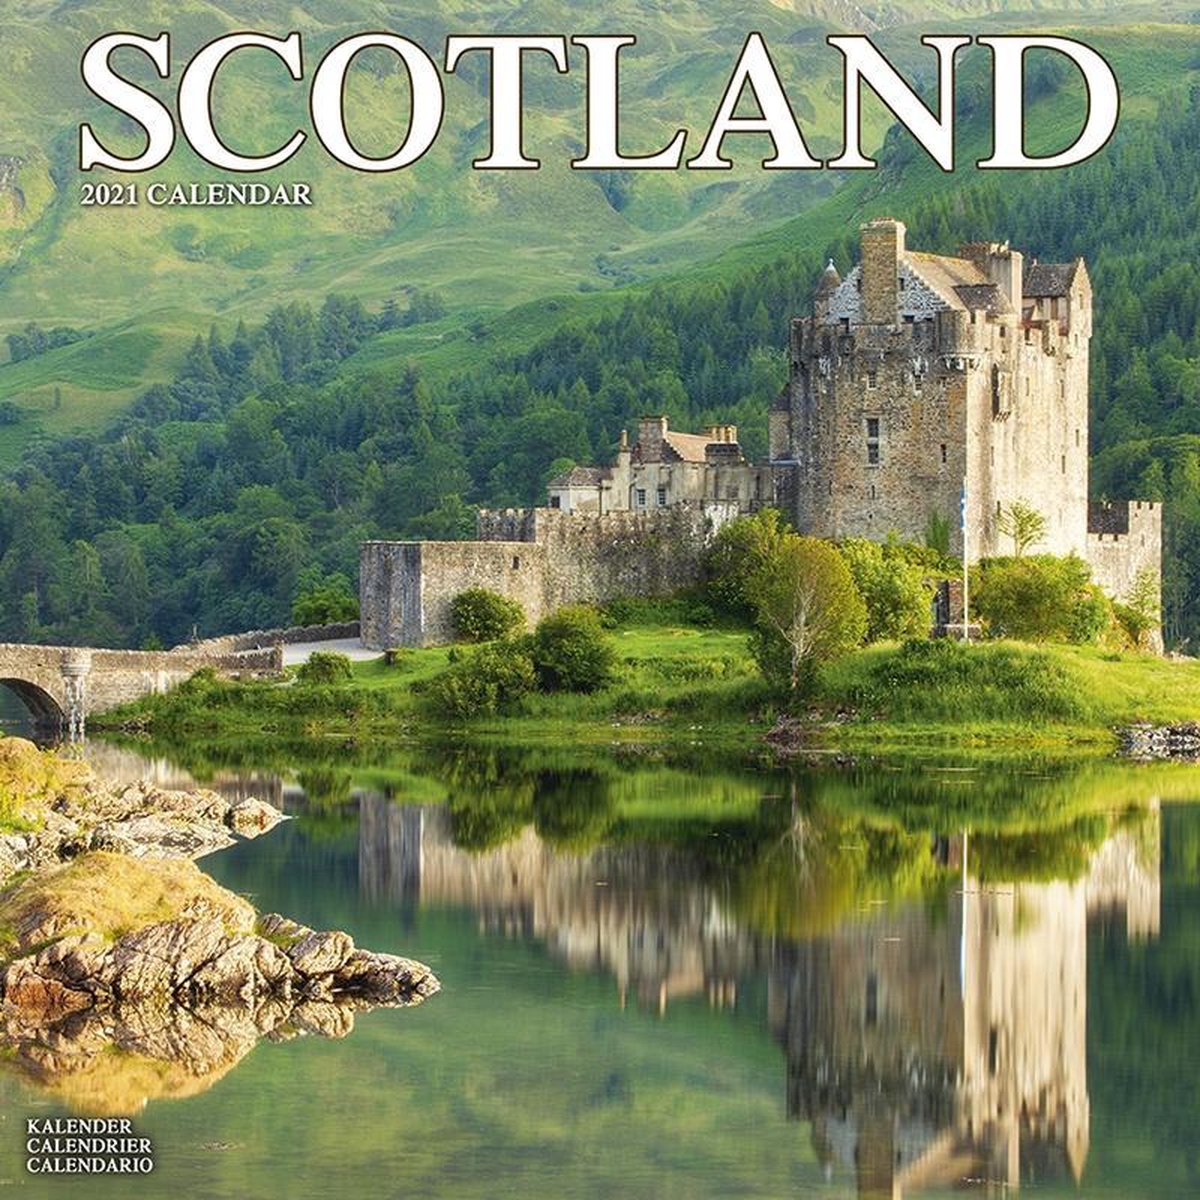 Schotland / Scotland Kalender 2021